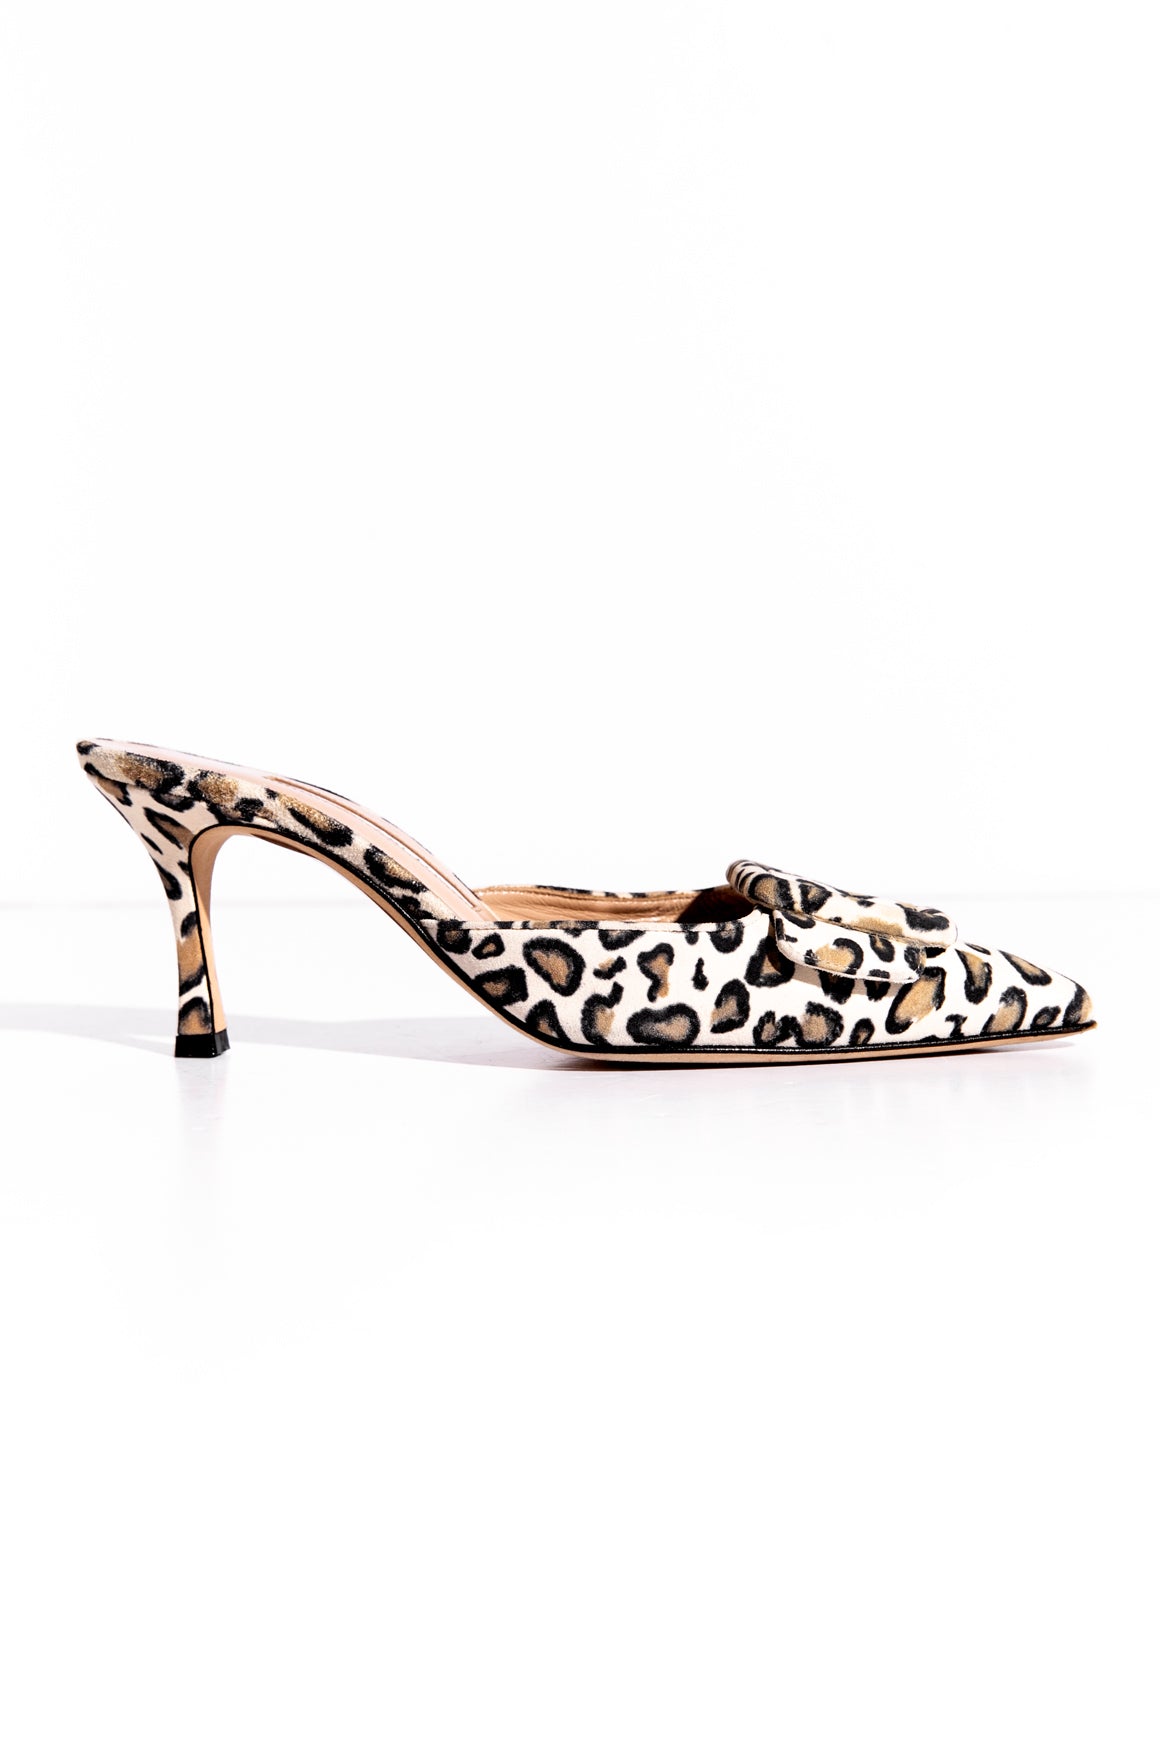 MANOLO BLAHNIK Leopard Kitten Heel Mules (Sz. 37) | MOSS Consignment